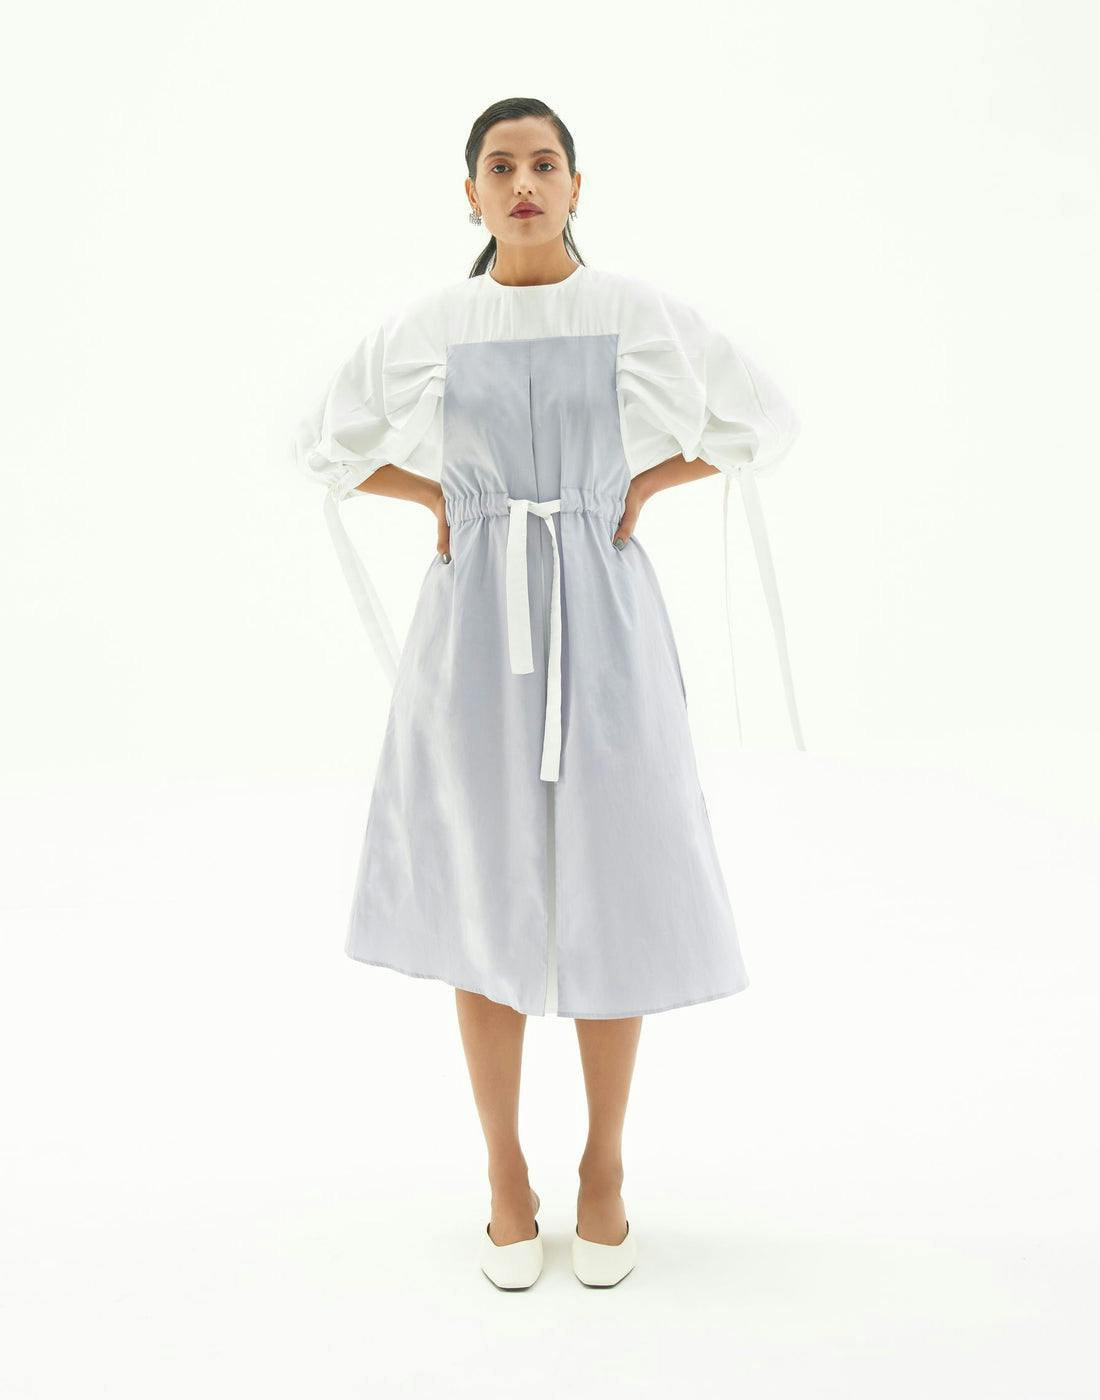 Colour Blocked Cotton dress, a product by Corpora Studio